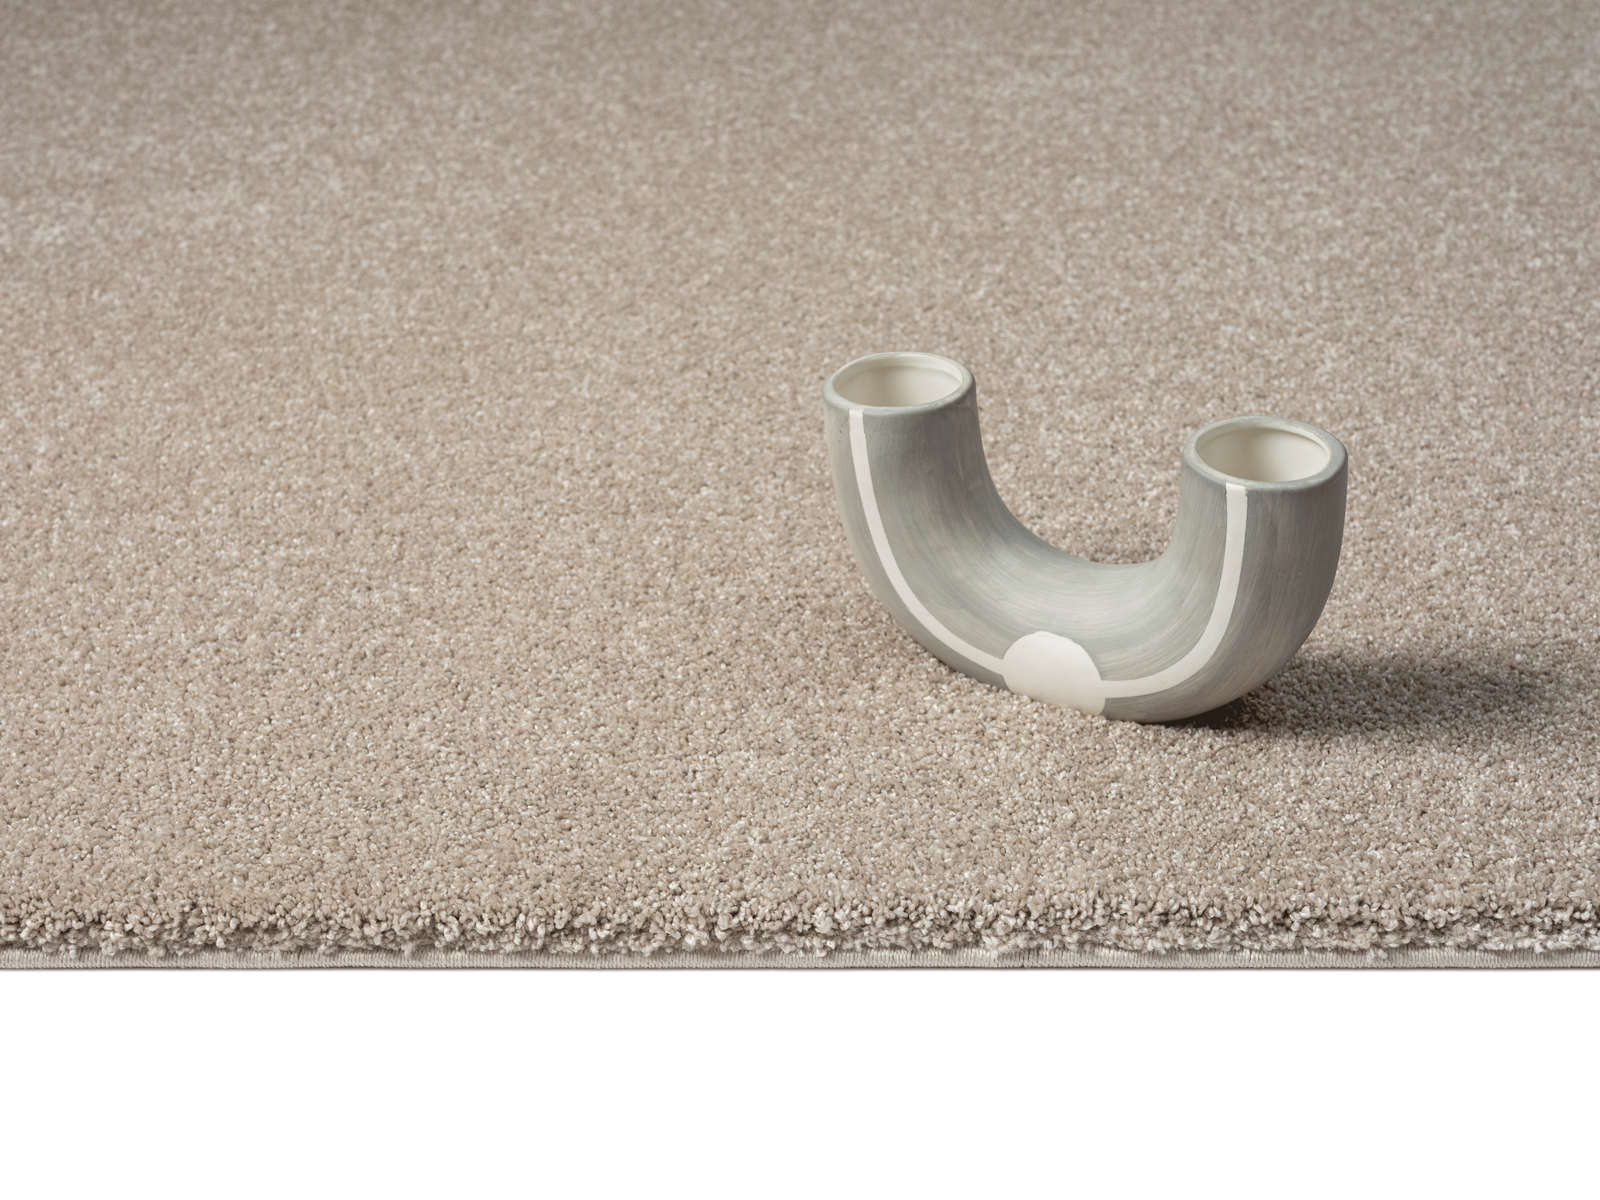             Soft short pile carpet in beige - 200 x 140 cm
        